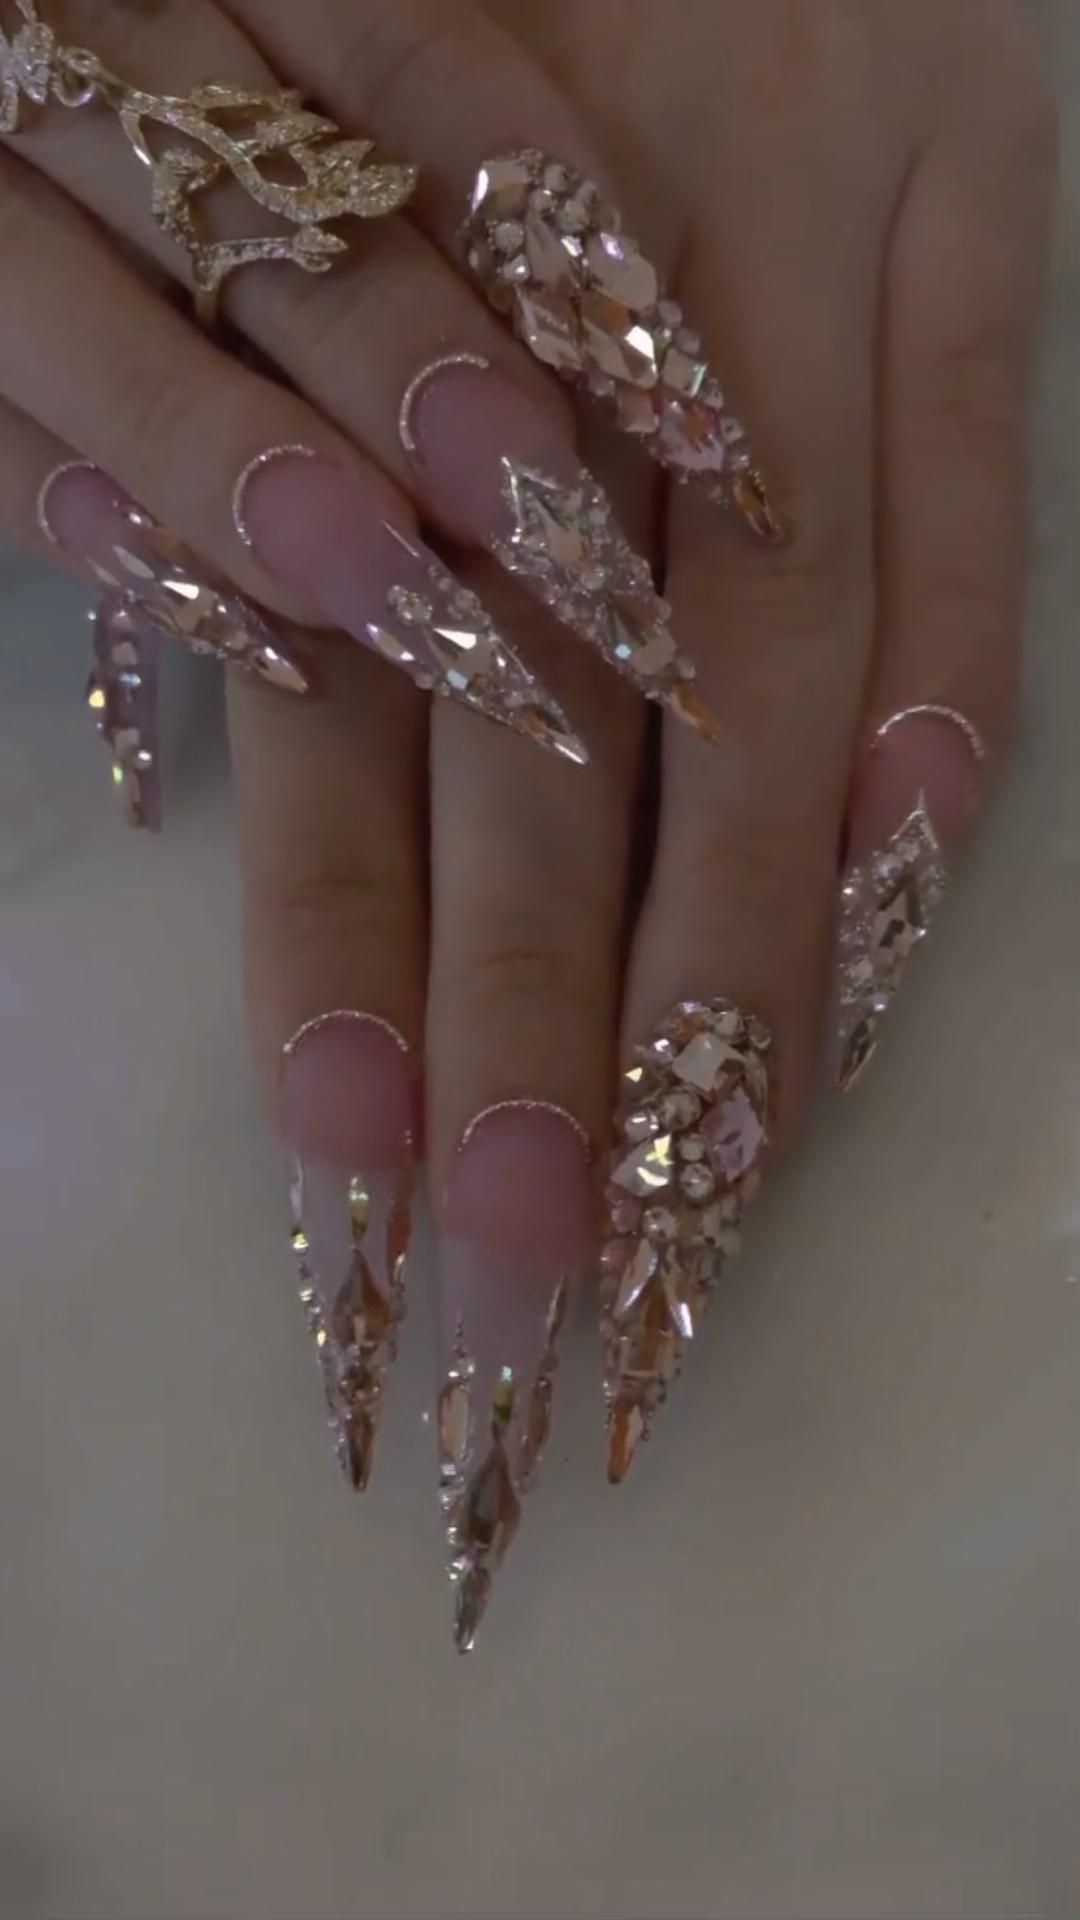 Nail Designs with Diamonds